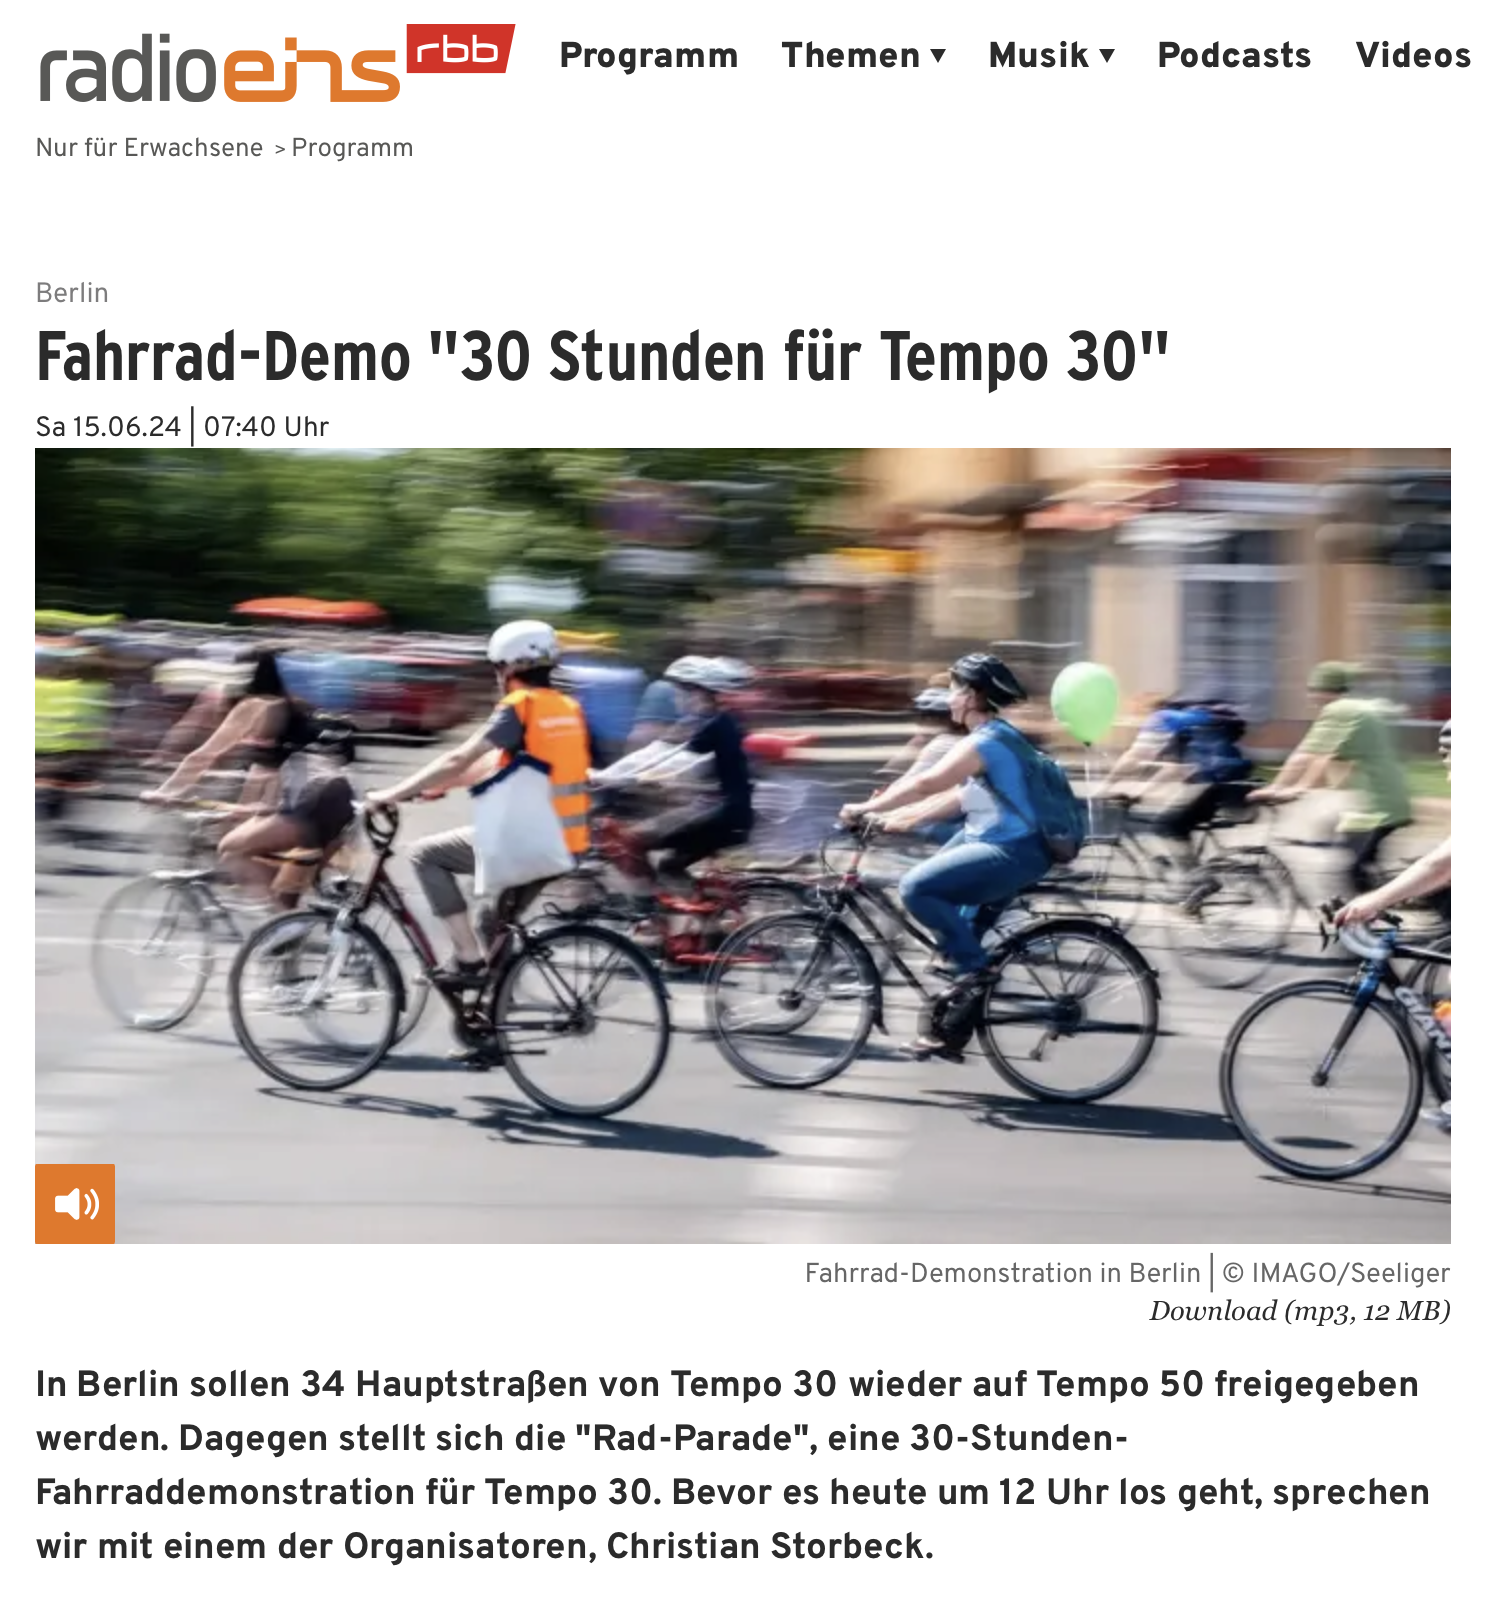 radioeins Radparade Tempo 30